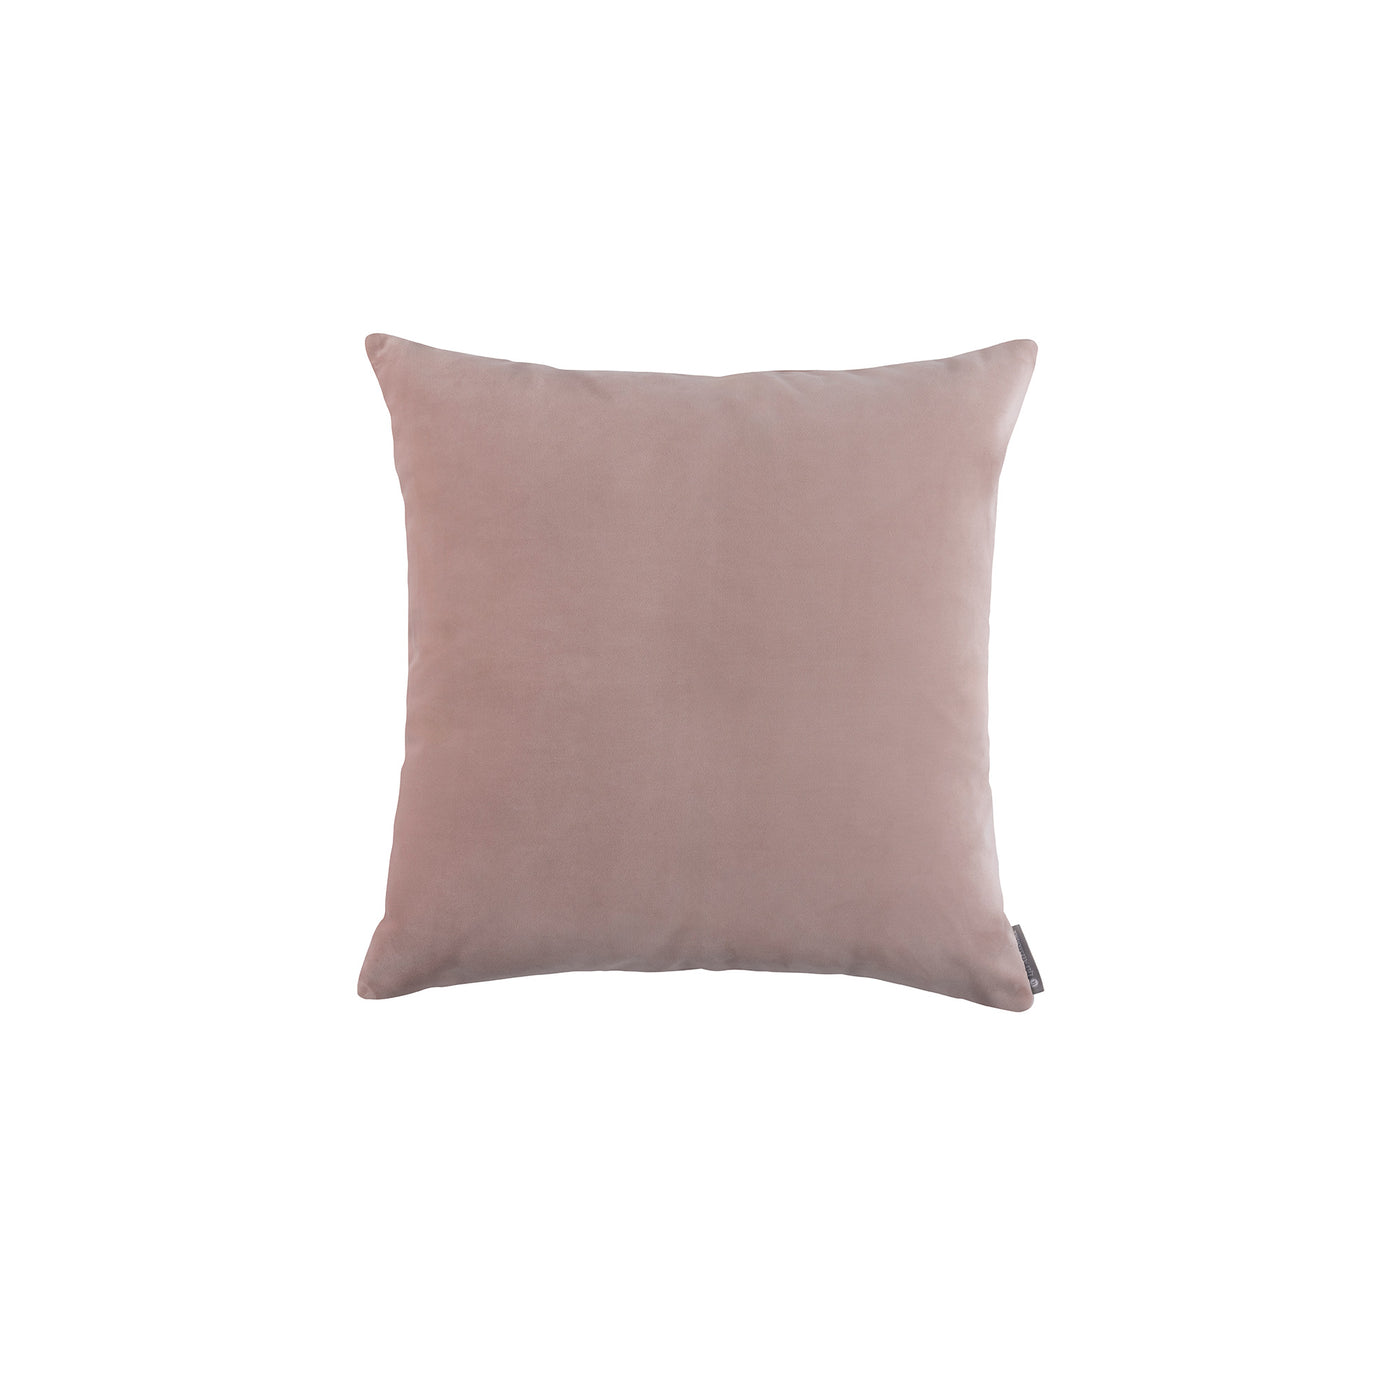 Vivid Cameo Medium Square Pillow (24x24)